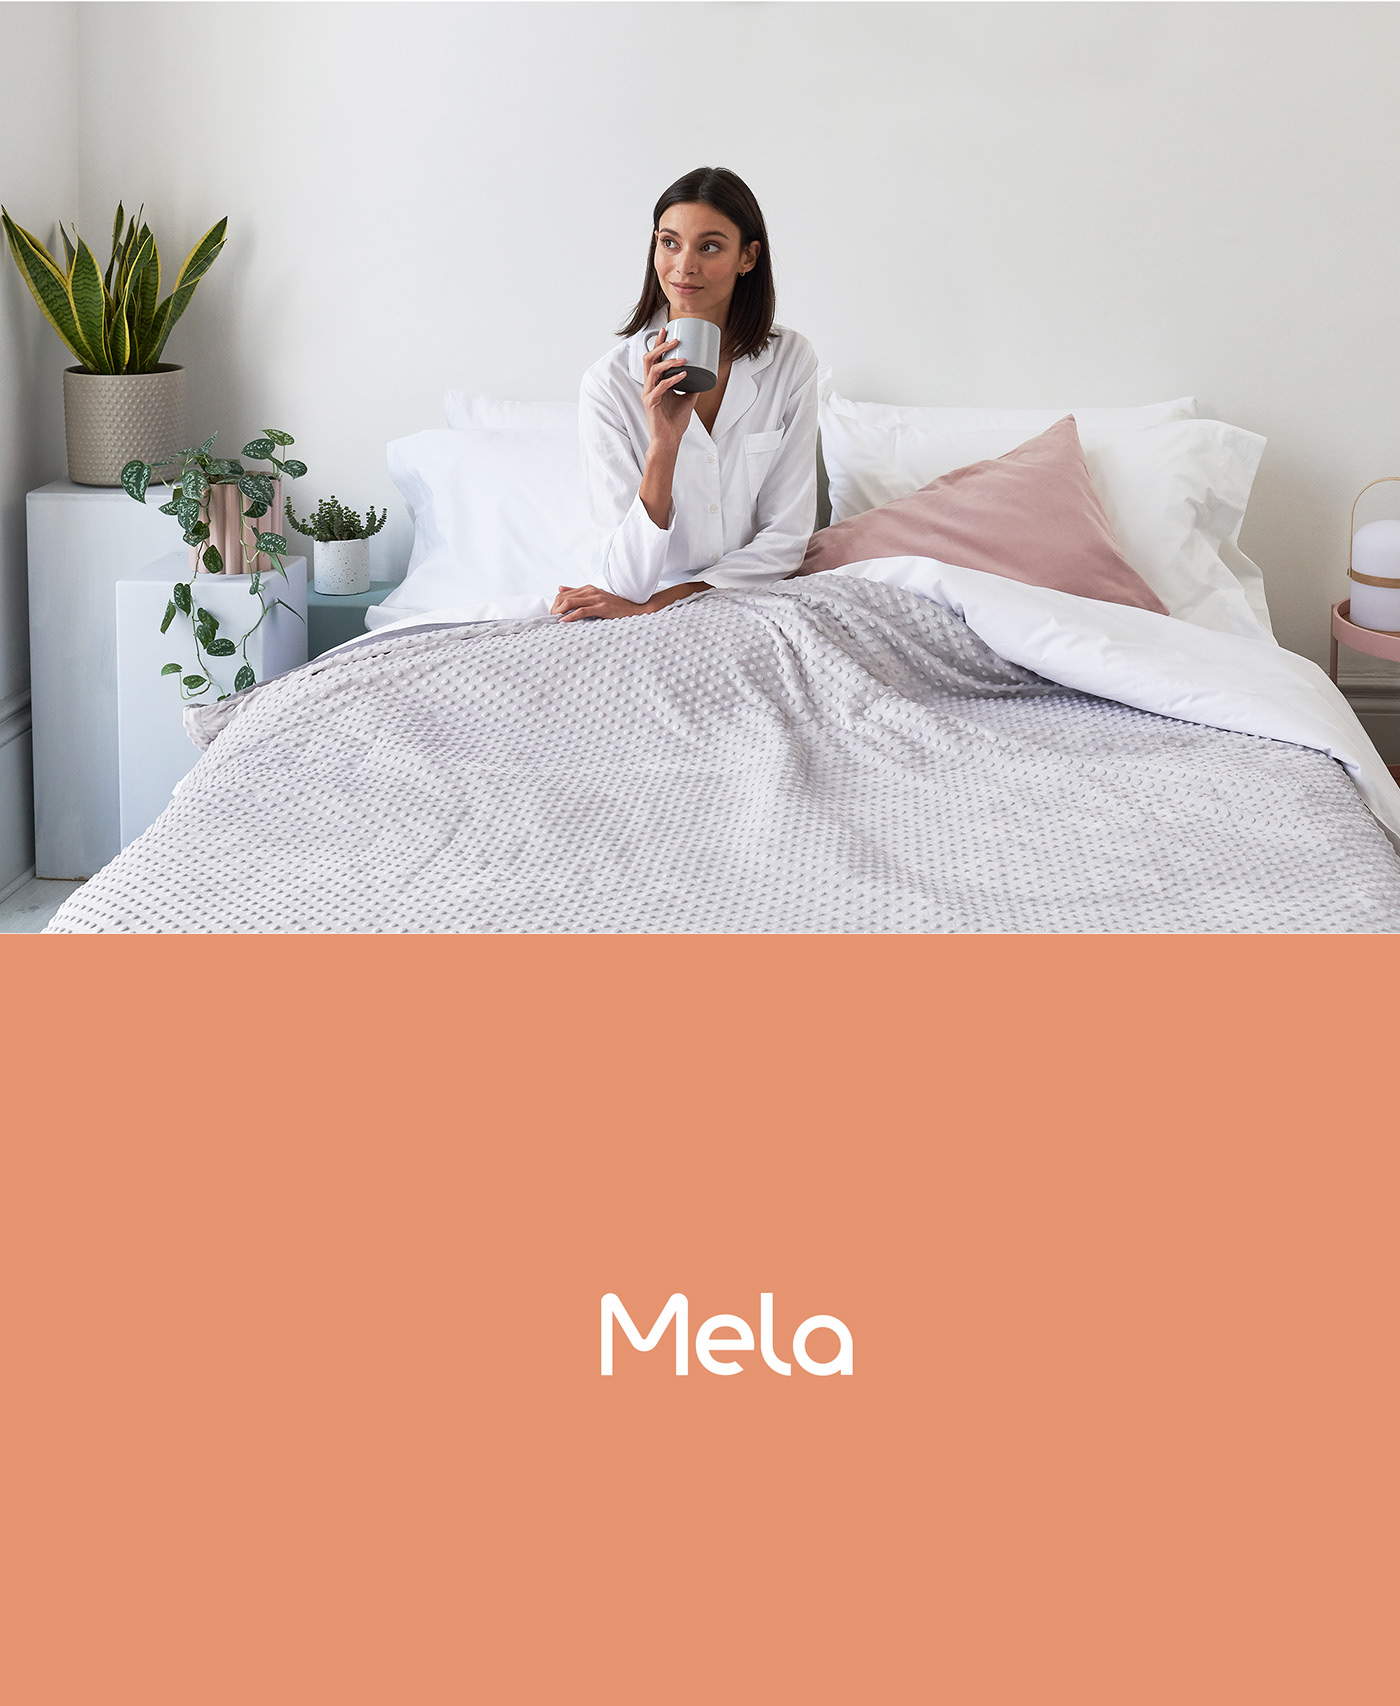 Mela weighted blankets branding on Behance